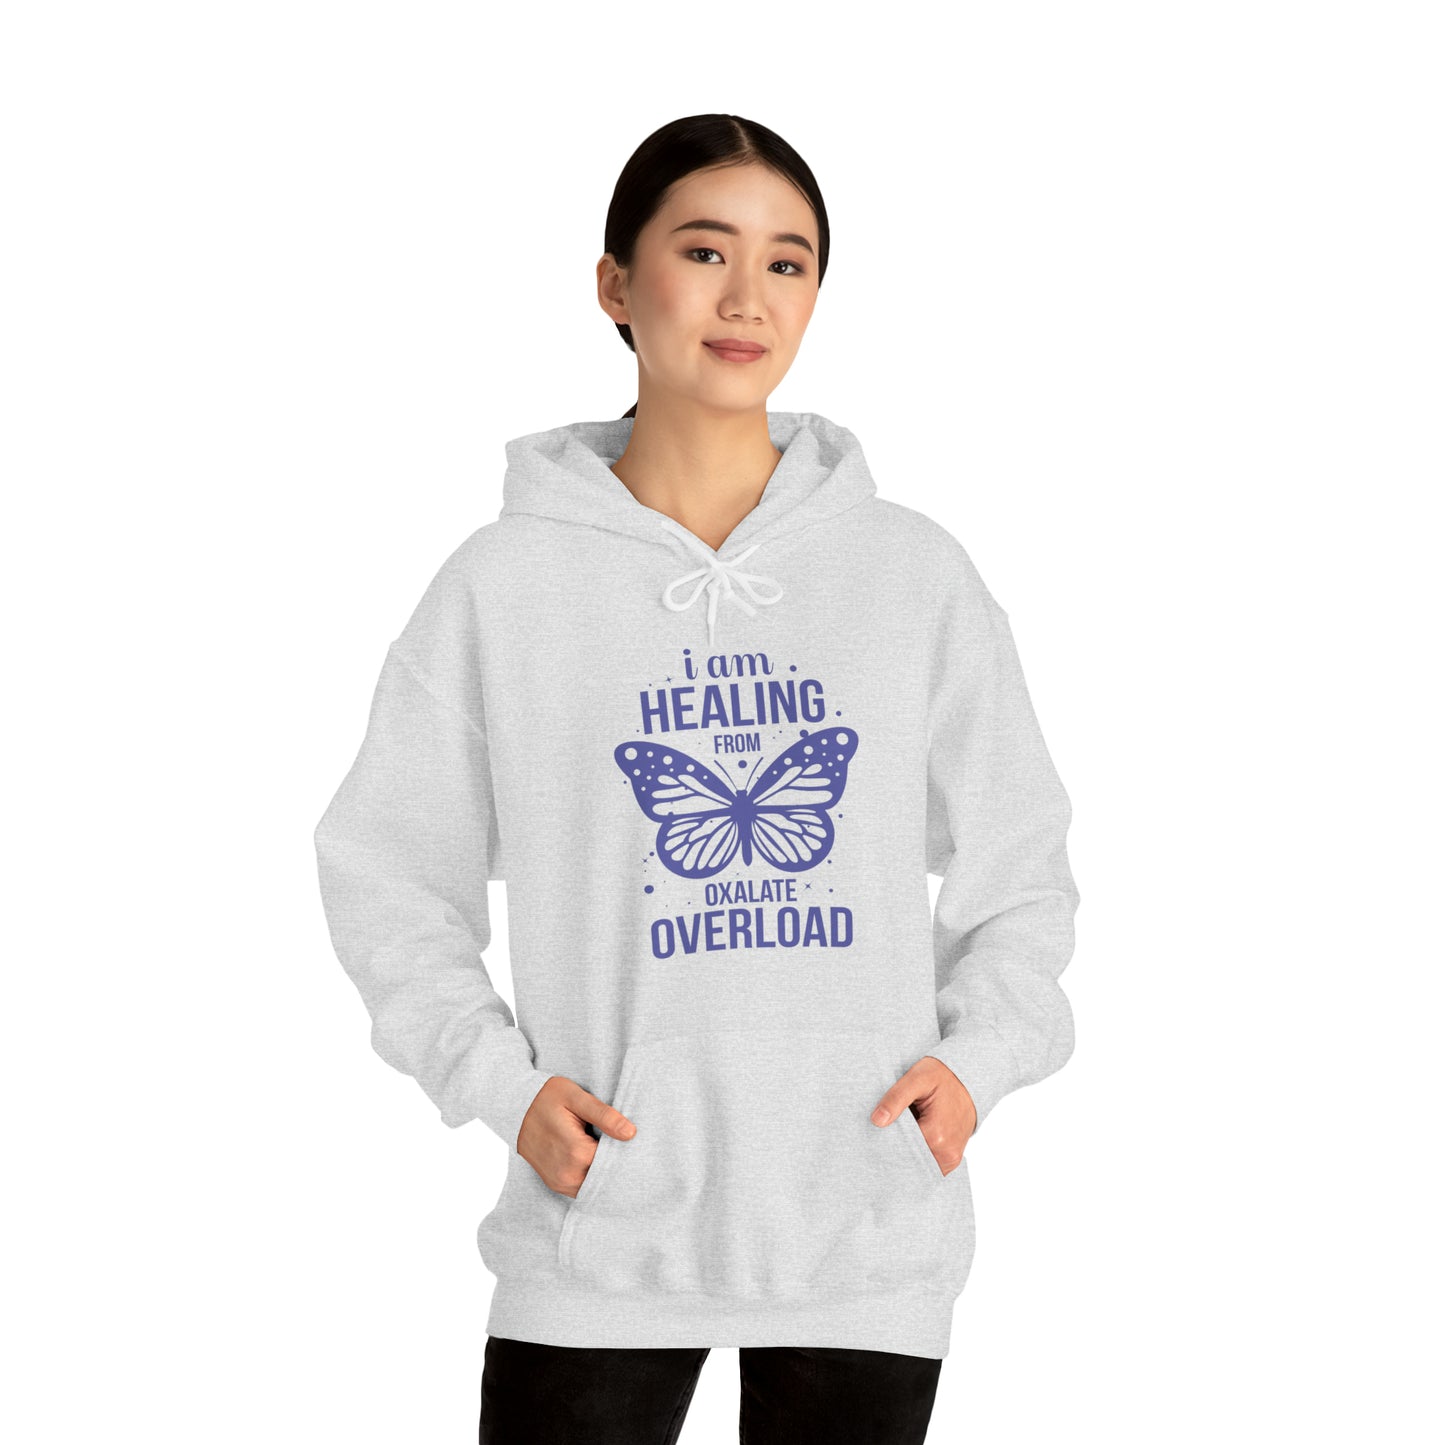 I am Healing from Oxalate Overload Hooded Sweatshirt